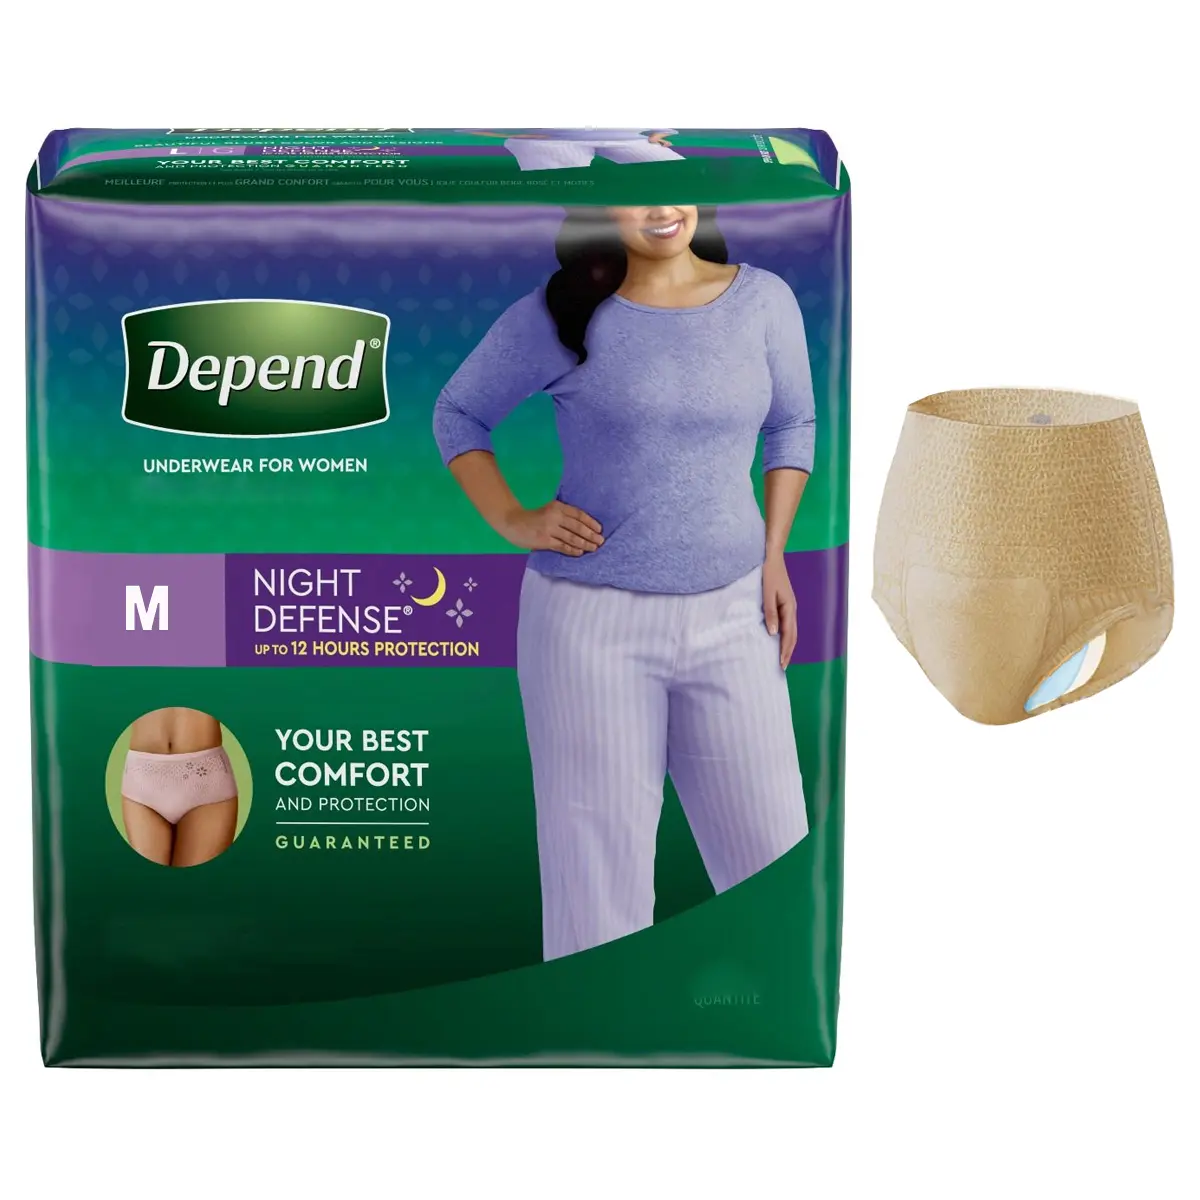 Depend Night Defense Underwear For Women, Overnight Absorbency, Blush, Medium, 31" - 37" Waist. REPLACES 6947918